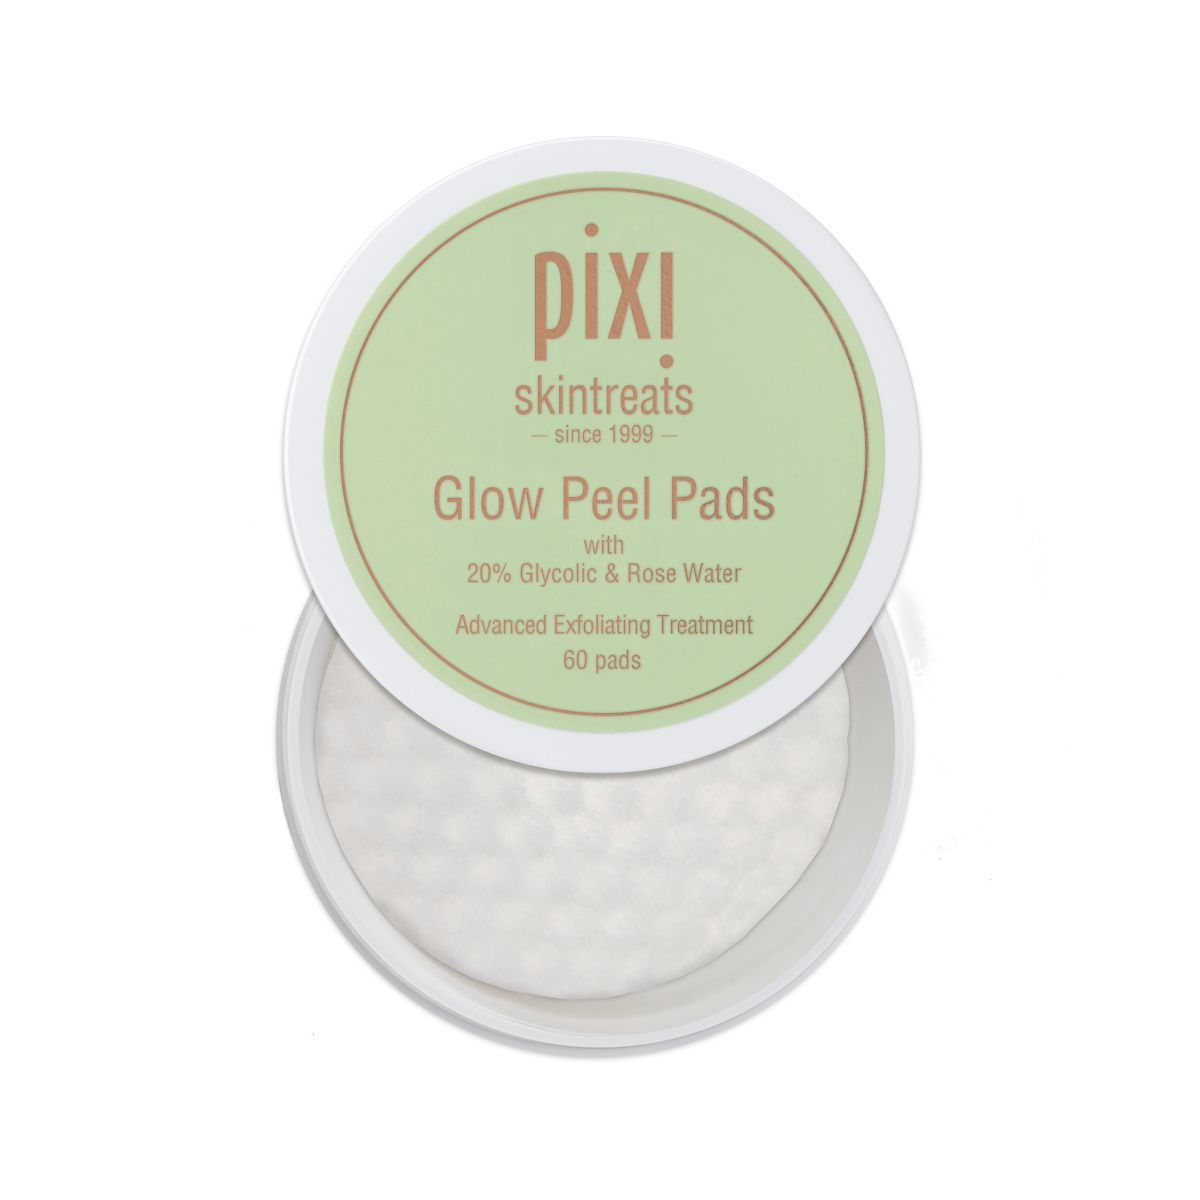 Pixi By Petra Glow Peel Advanced Exfoliating Pads - 60ct | Target